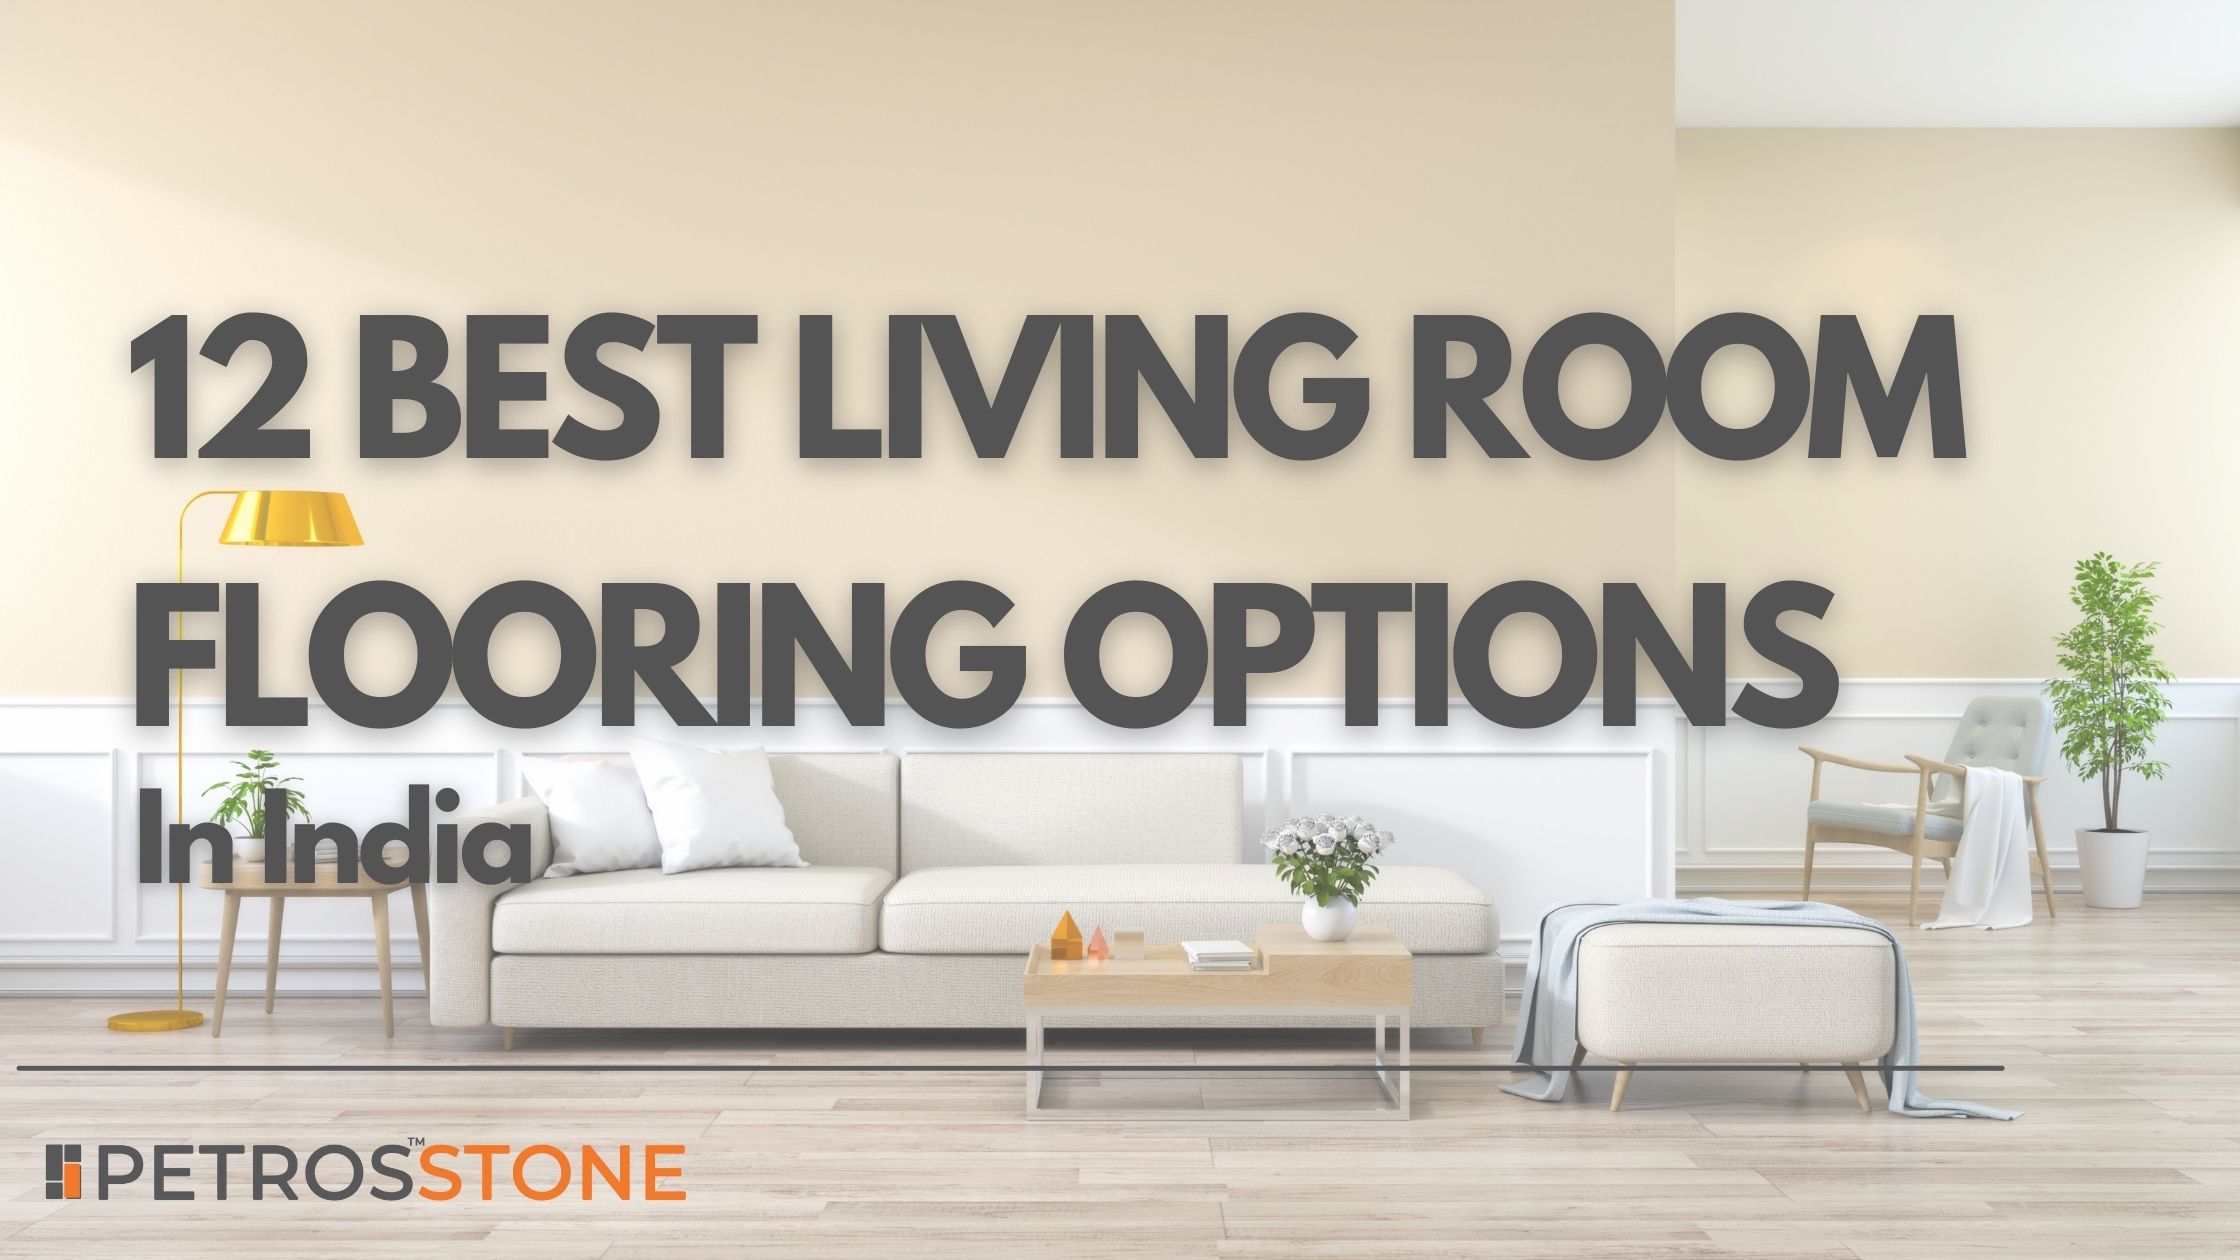 12 Best Living Room Flooring Options India